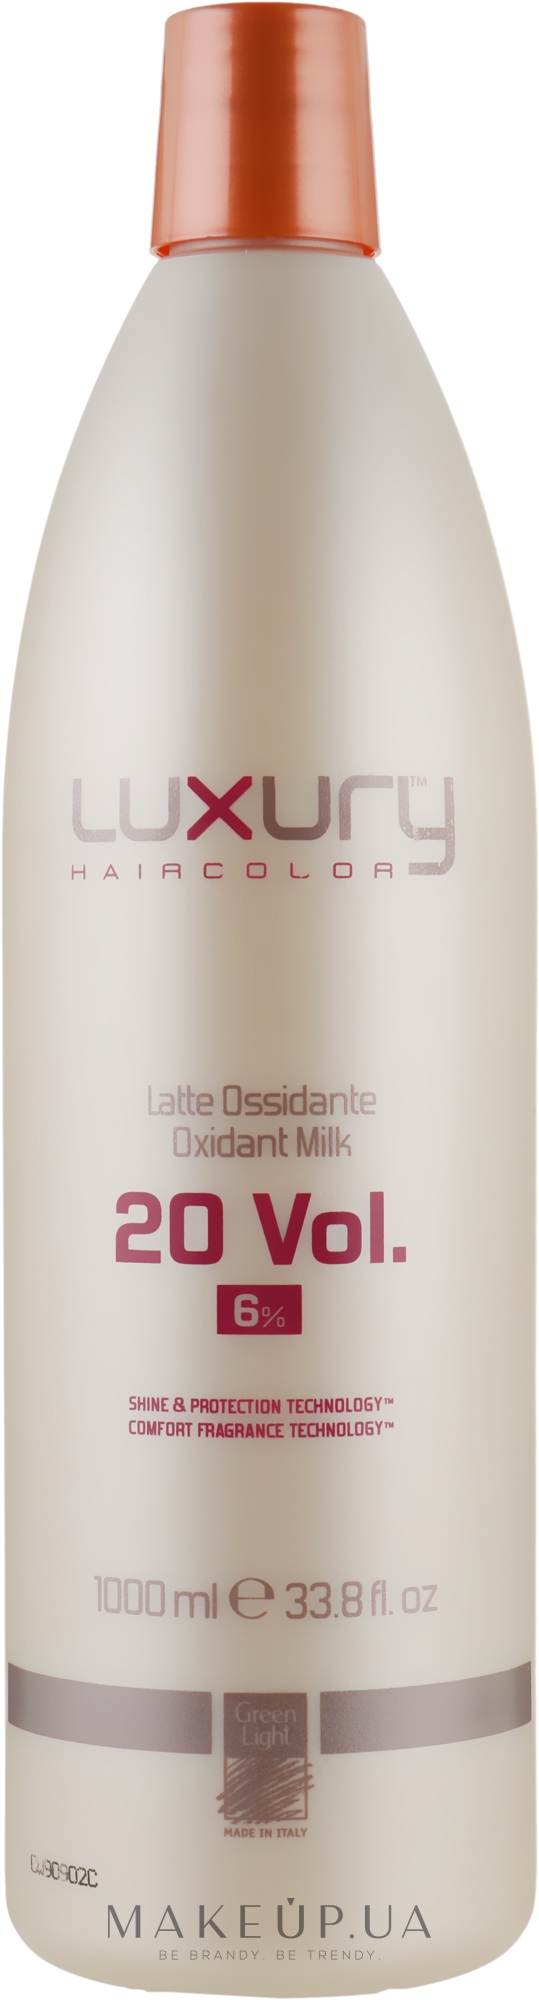 Молочний Оксидант - Green Light Luxury Haircolor Oxidant Milk 6% 20 vol. — фото 1000ml